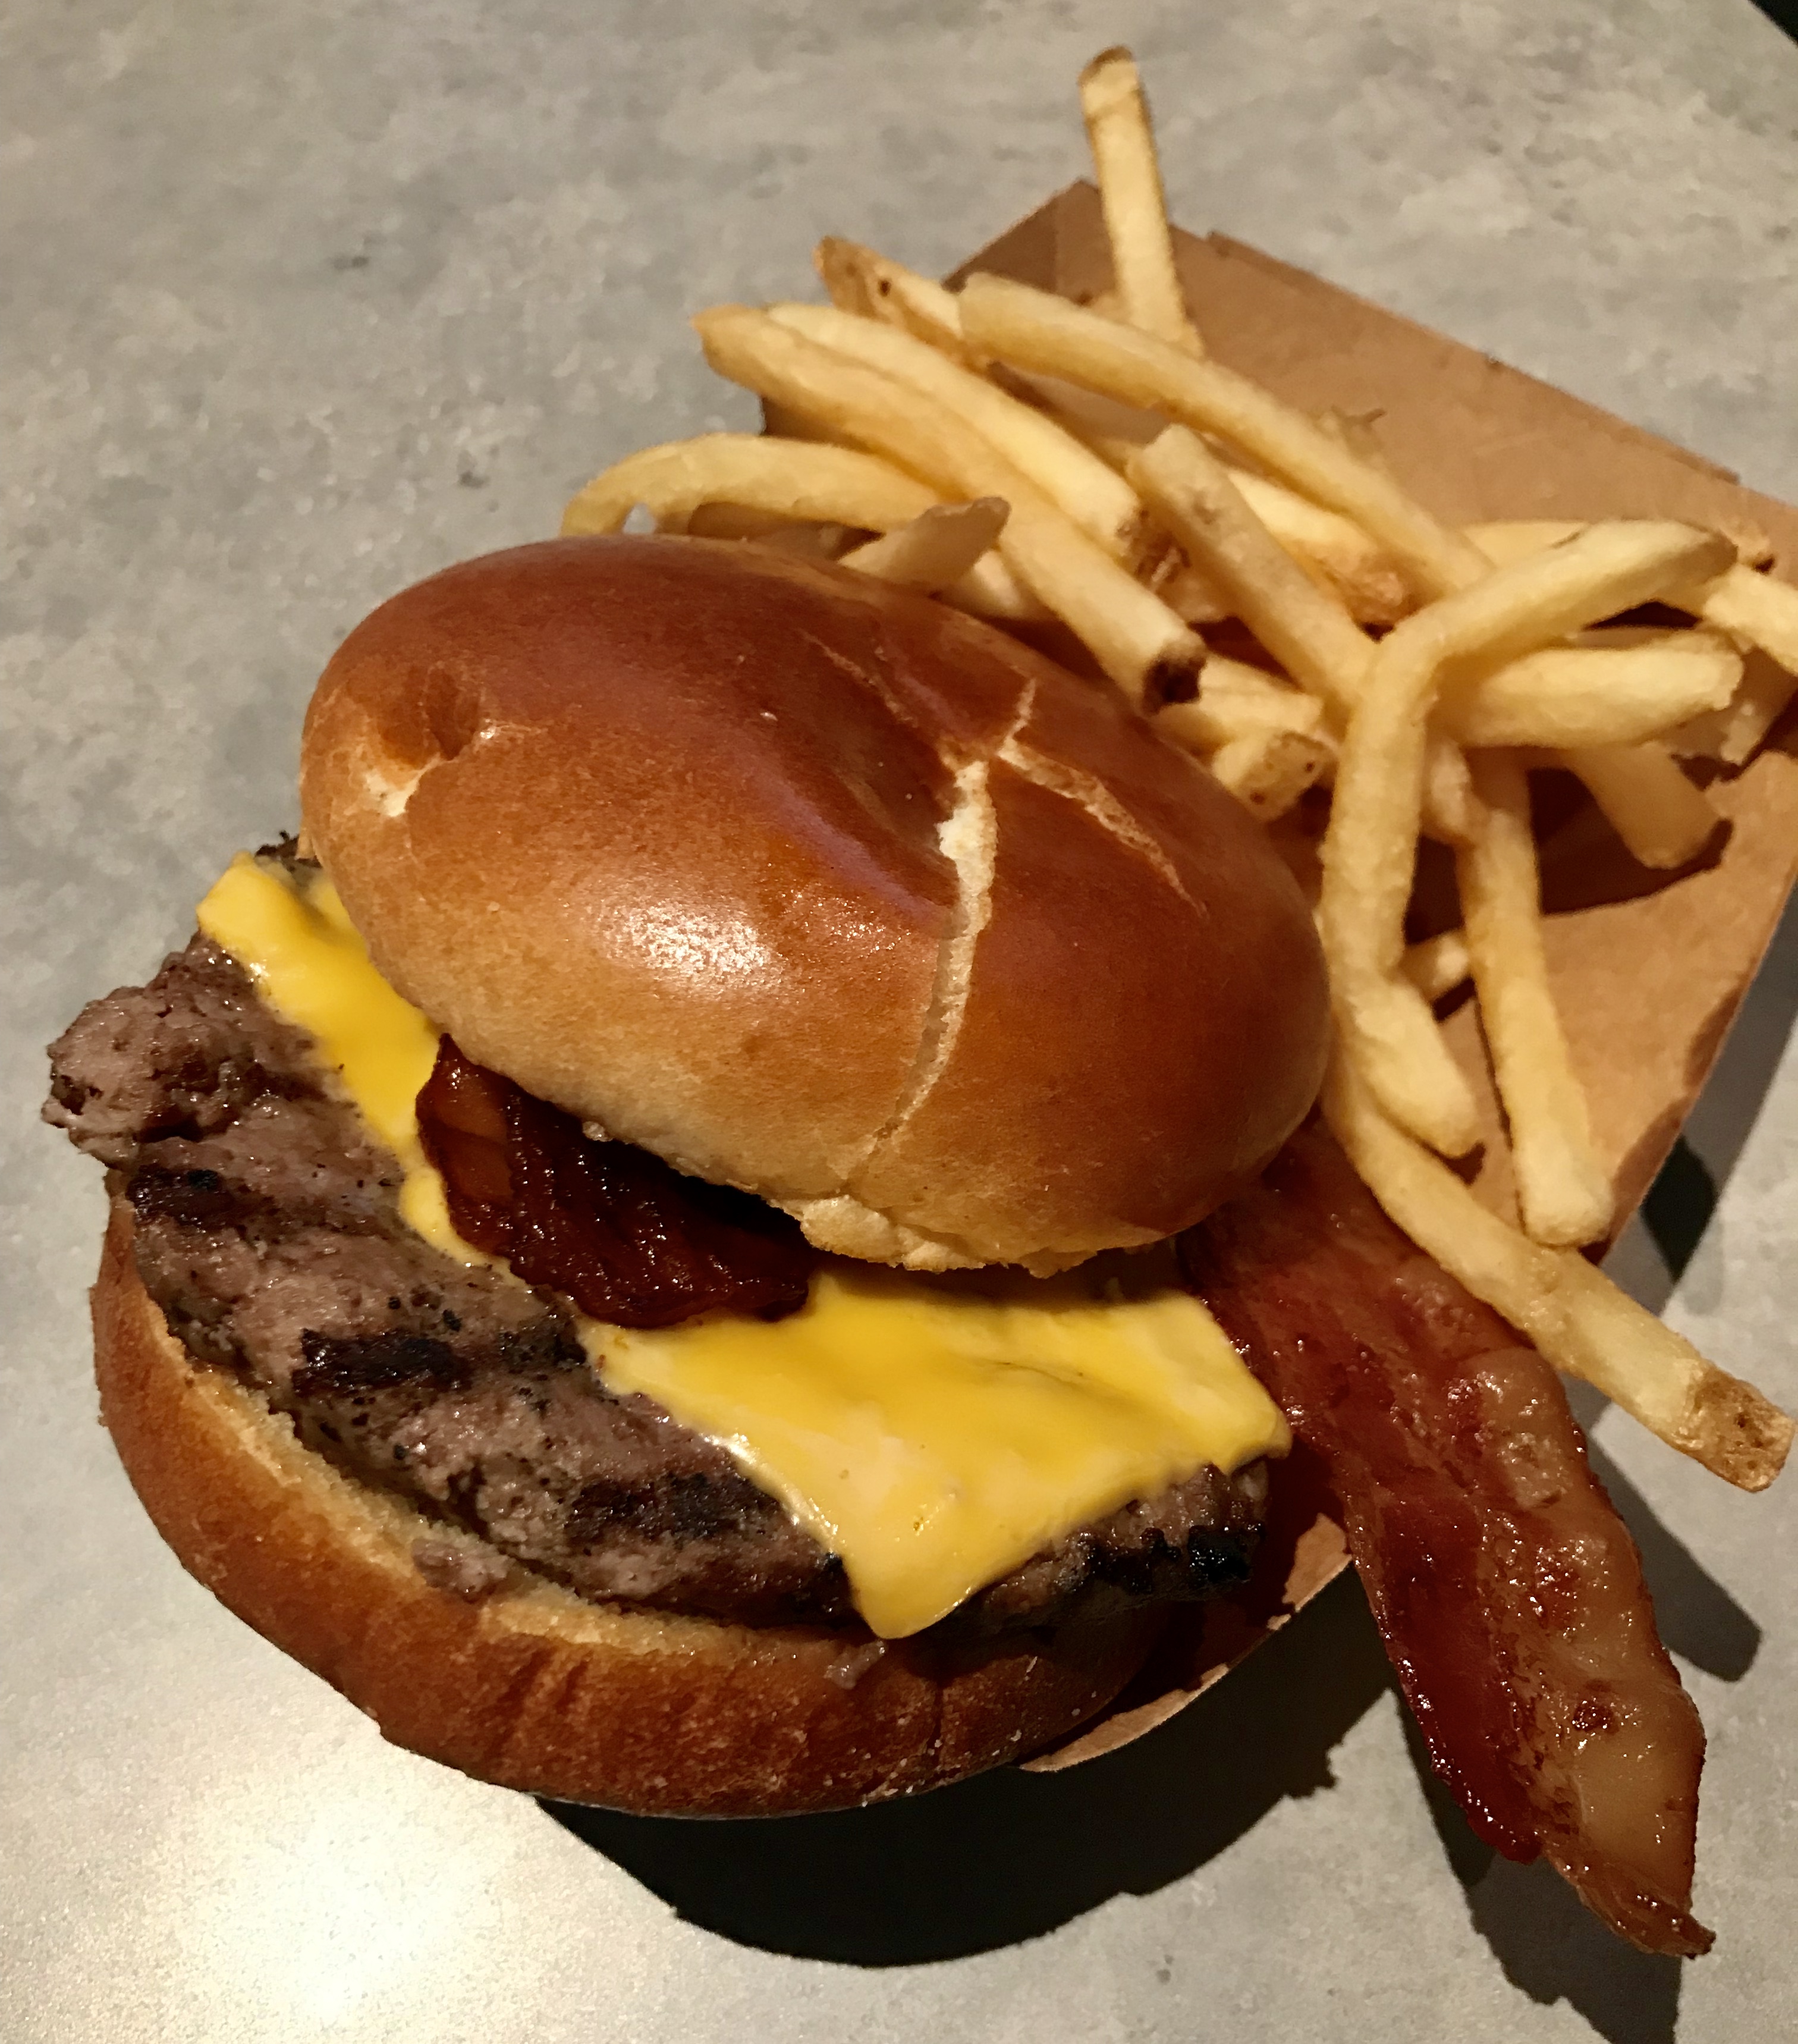 angus bacon cheeseburger and fries from backlot express restaurant